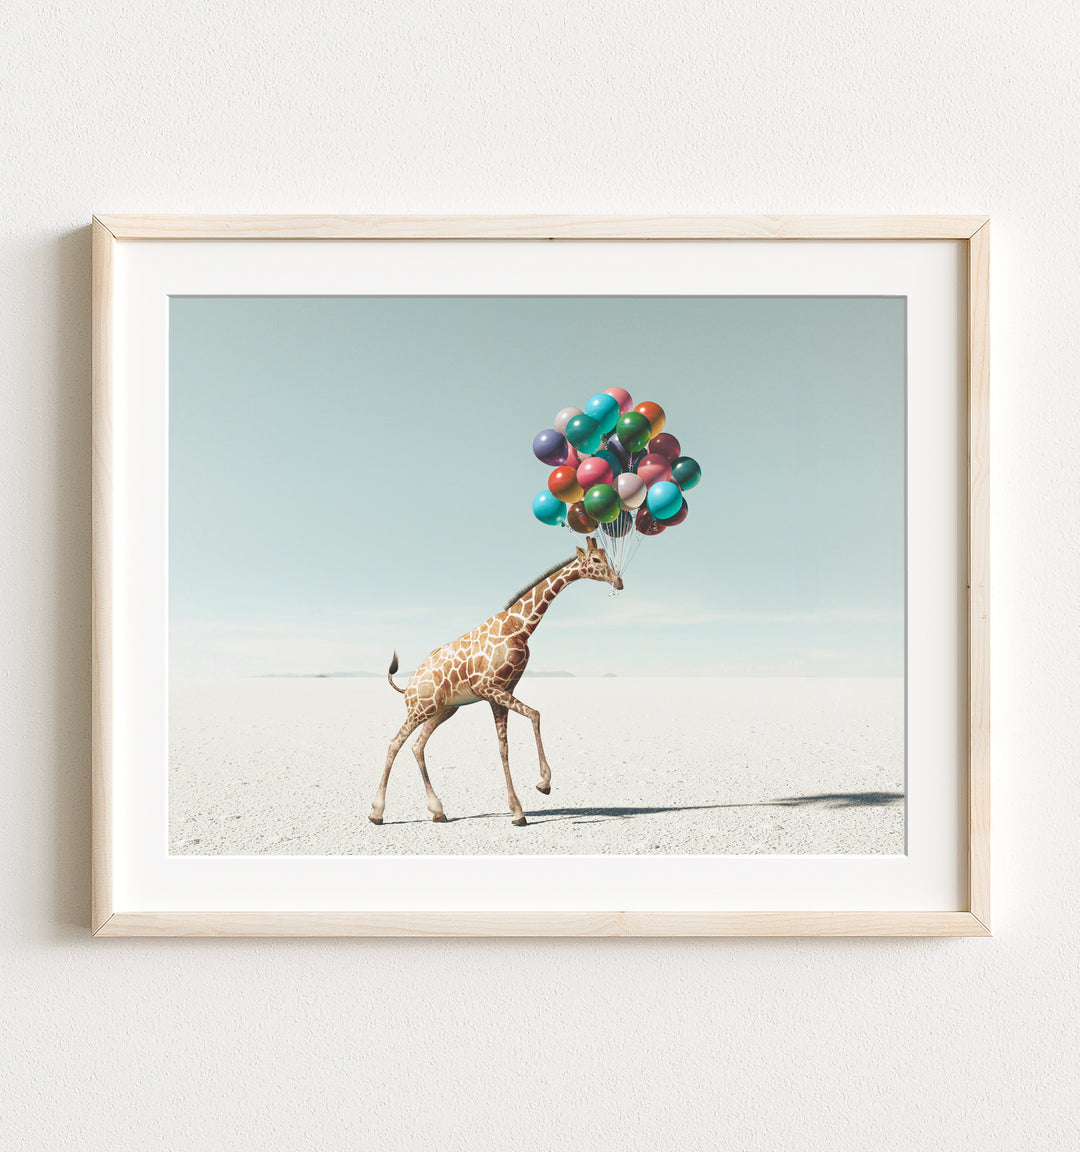 Giraffe with Balloons